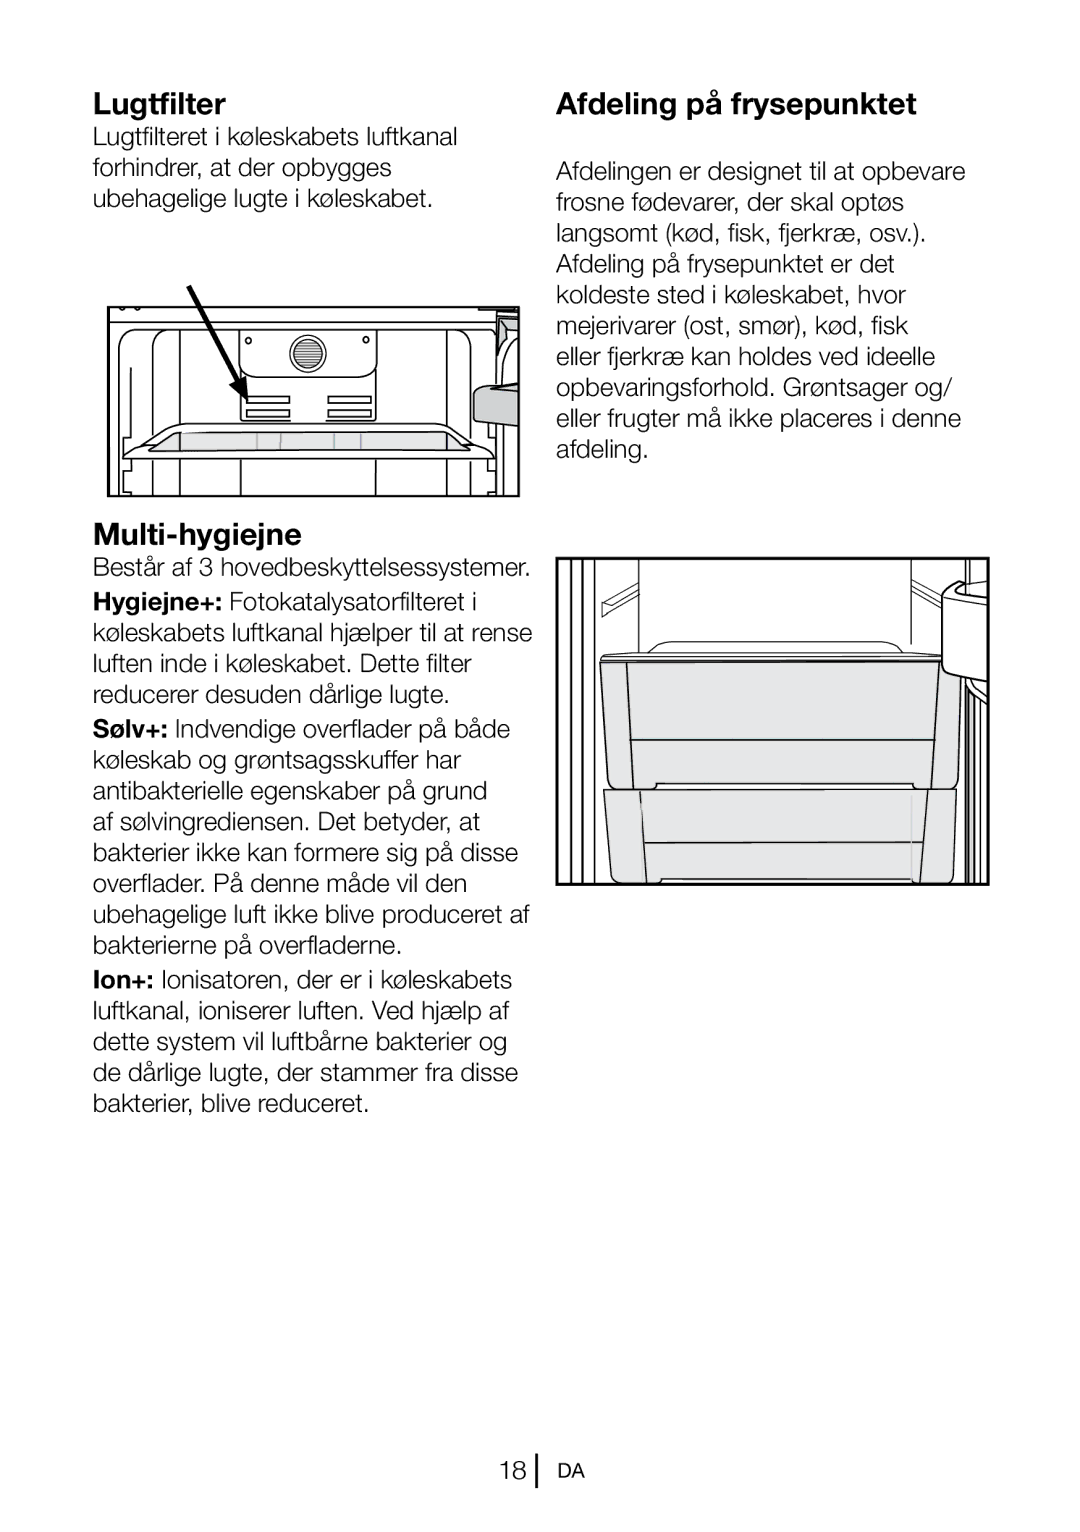 Blomberg KND 9651 A+, KND 9651 XA+ operating instructions Lugtfilter, Afdeling på frysepunktet, Multi-hygiejne 